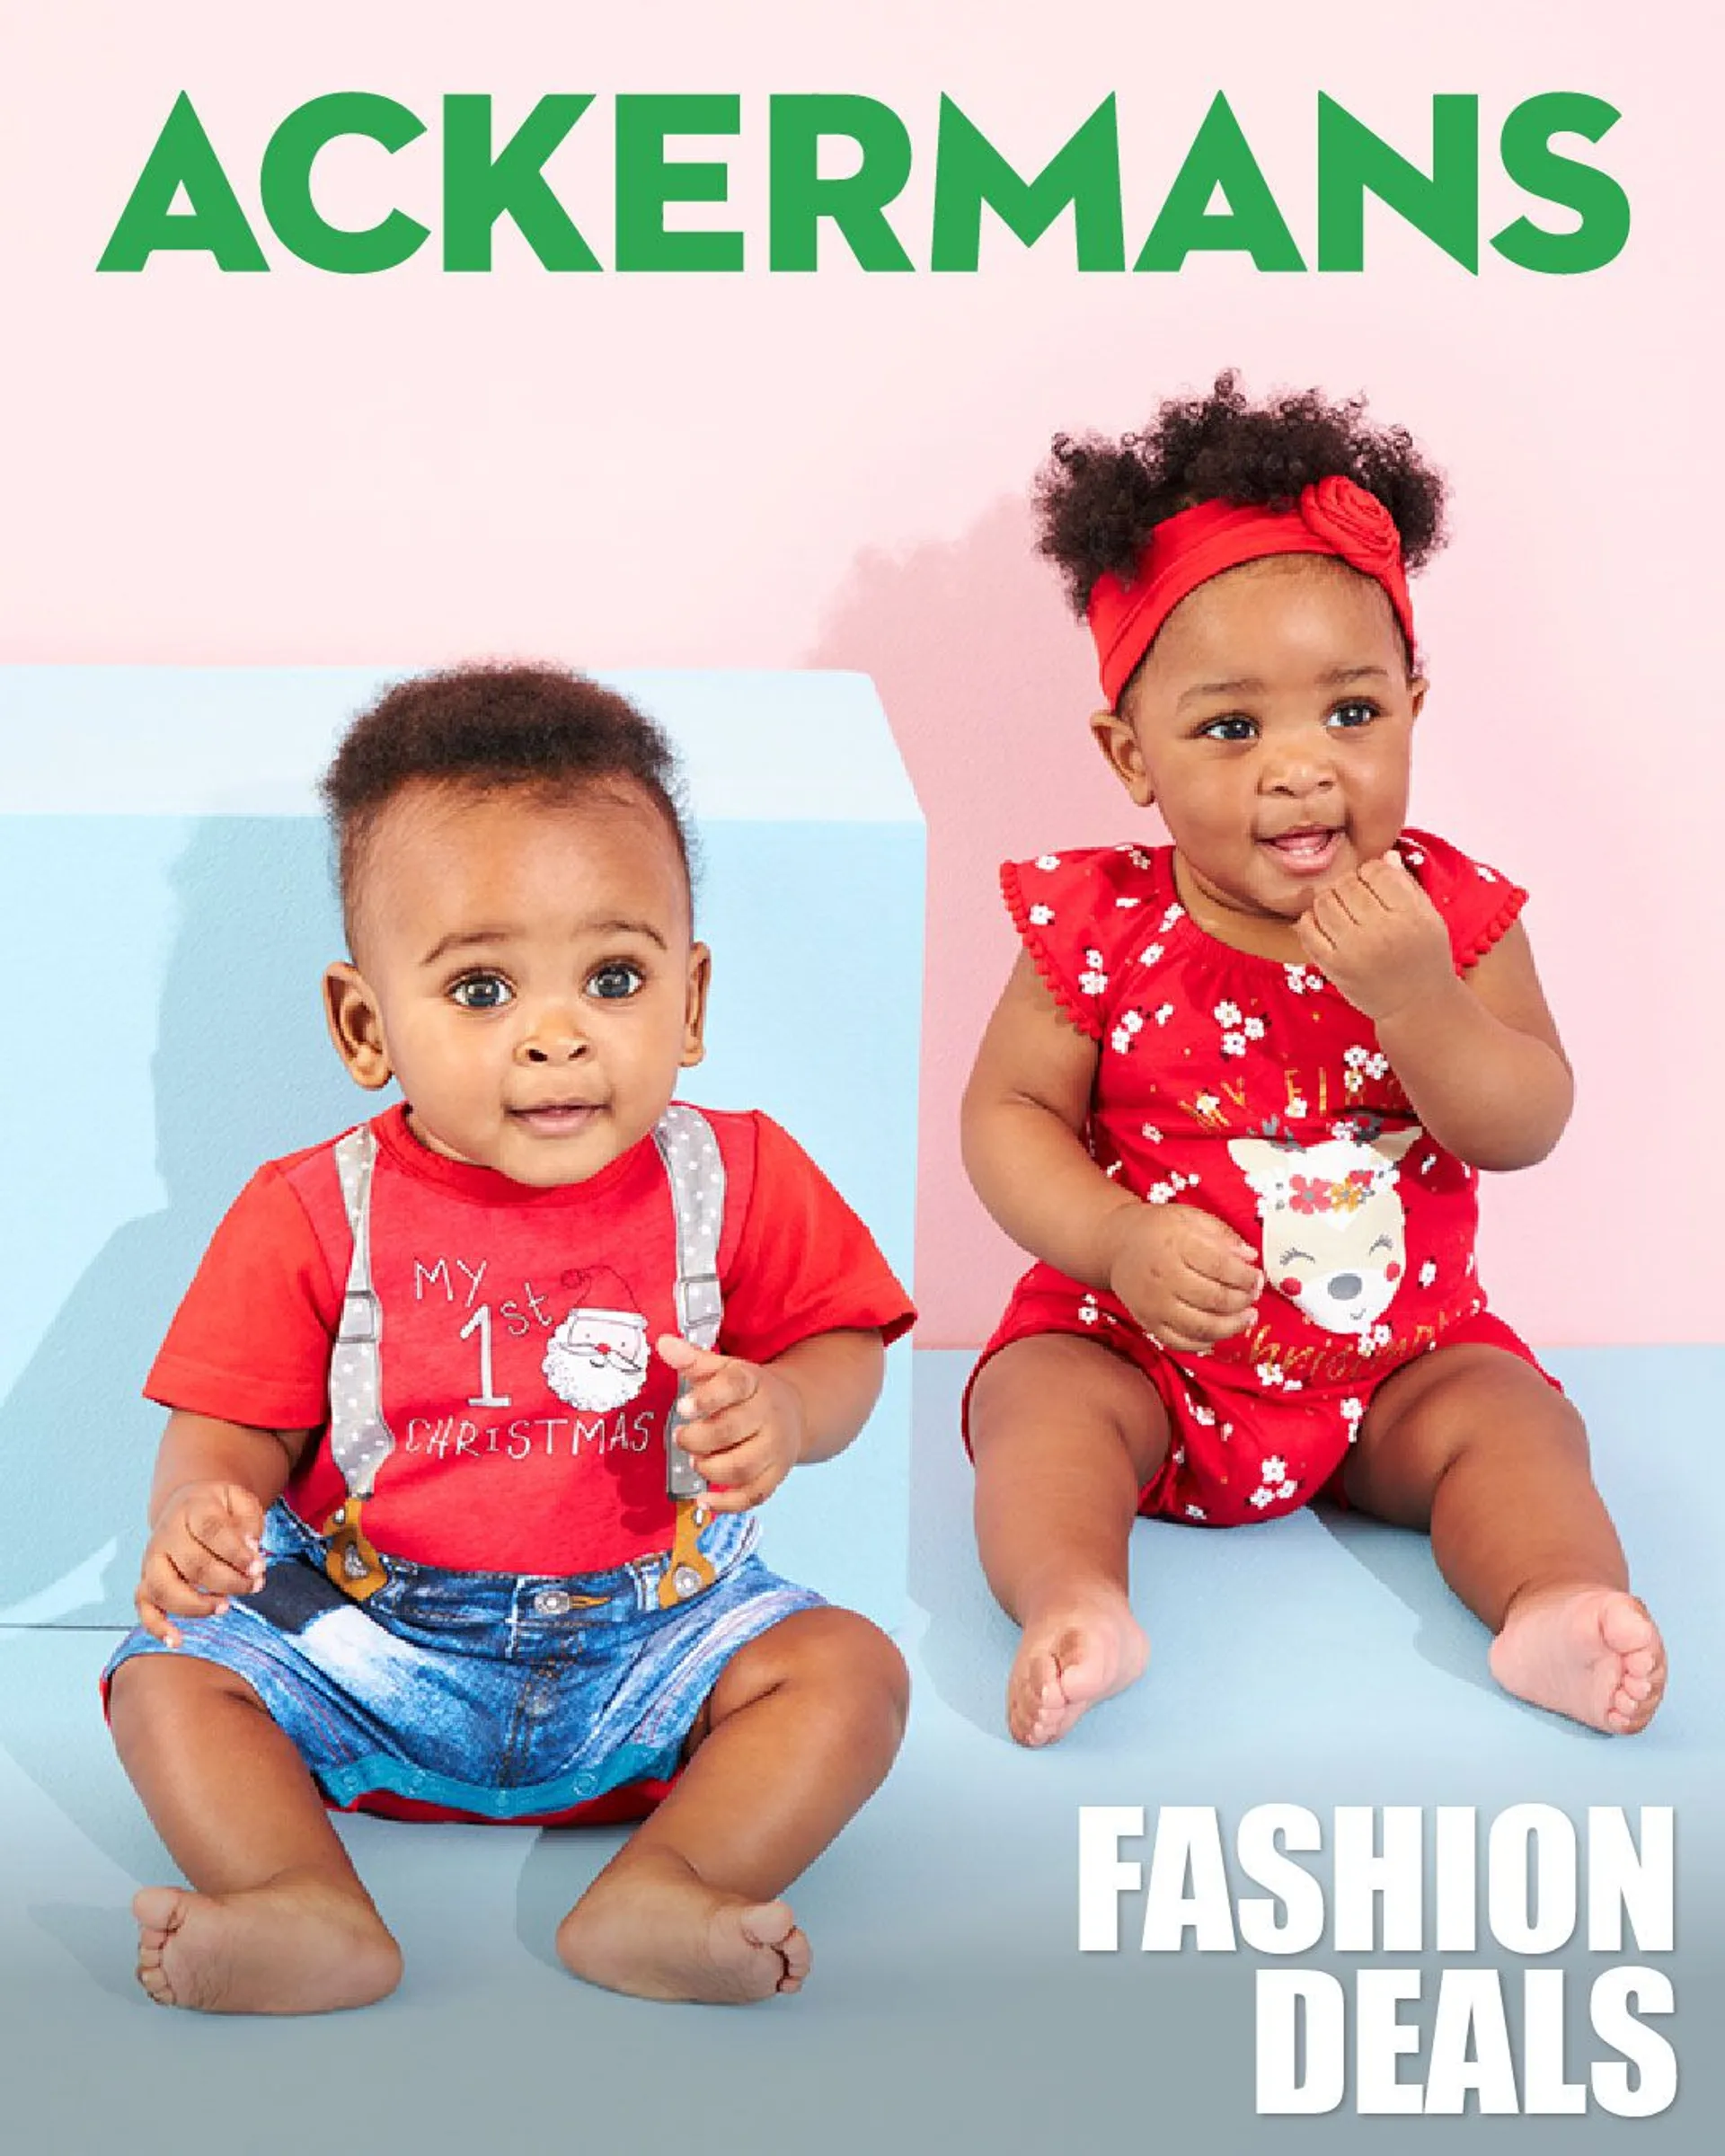 Ackermans - Fashion